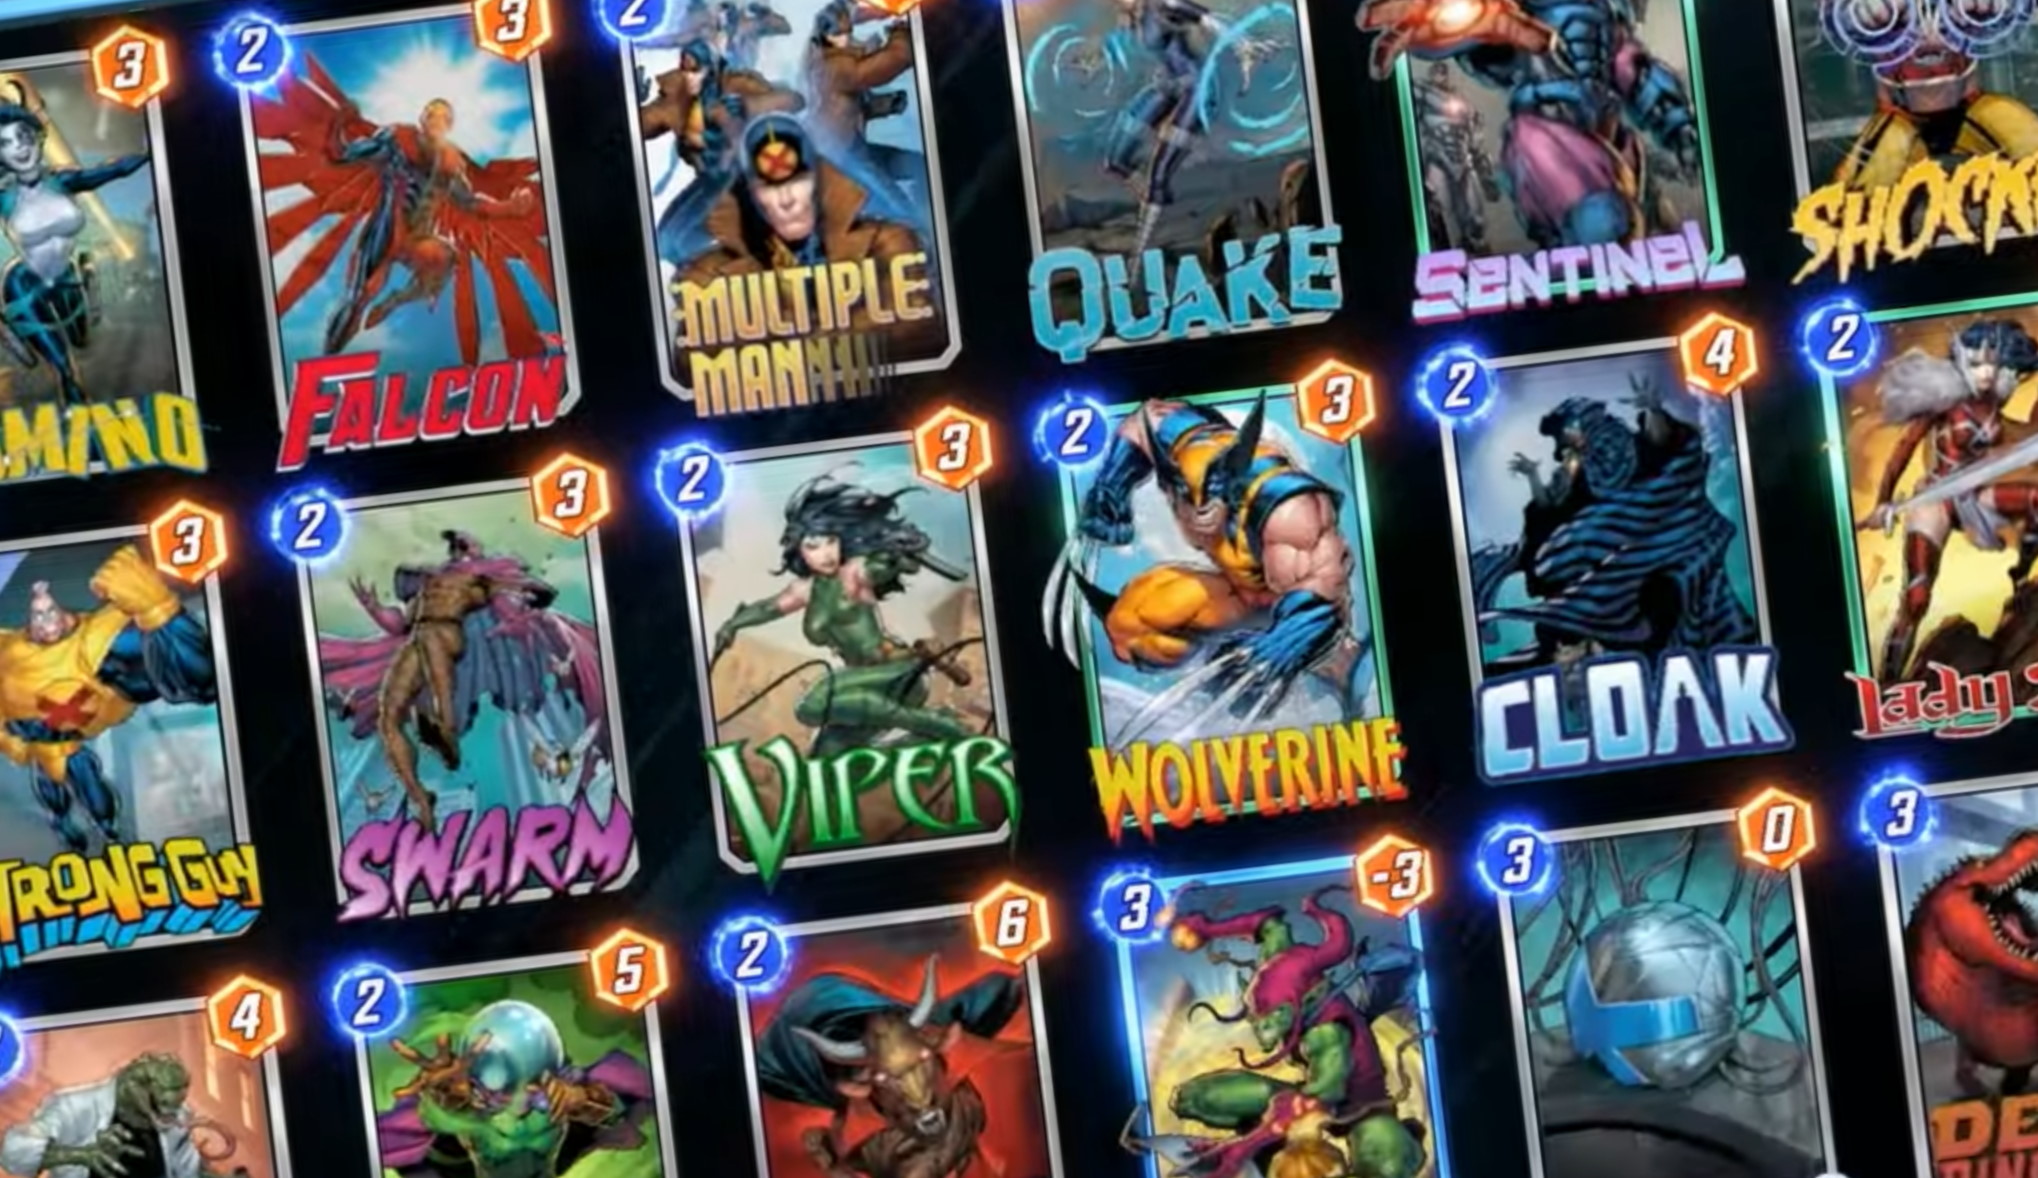  Marvel Snap, Ben Brode's new superhero card game, hits full release in October 